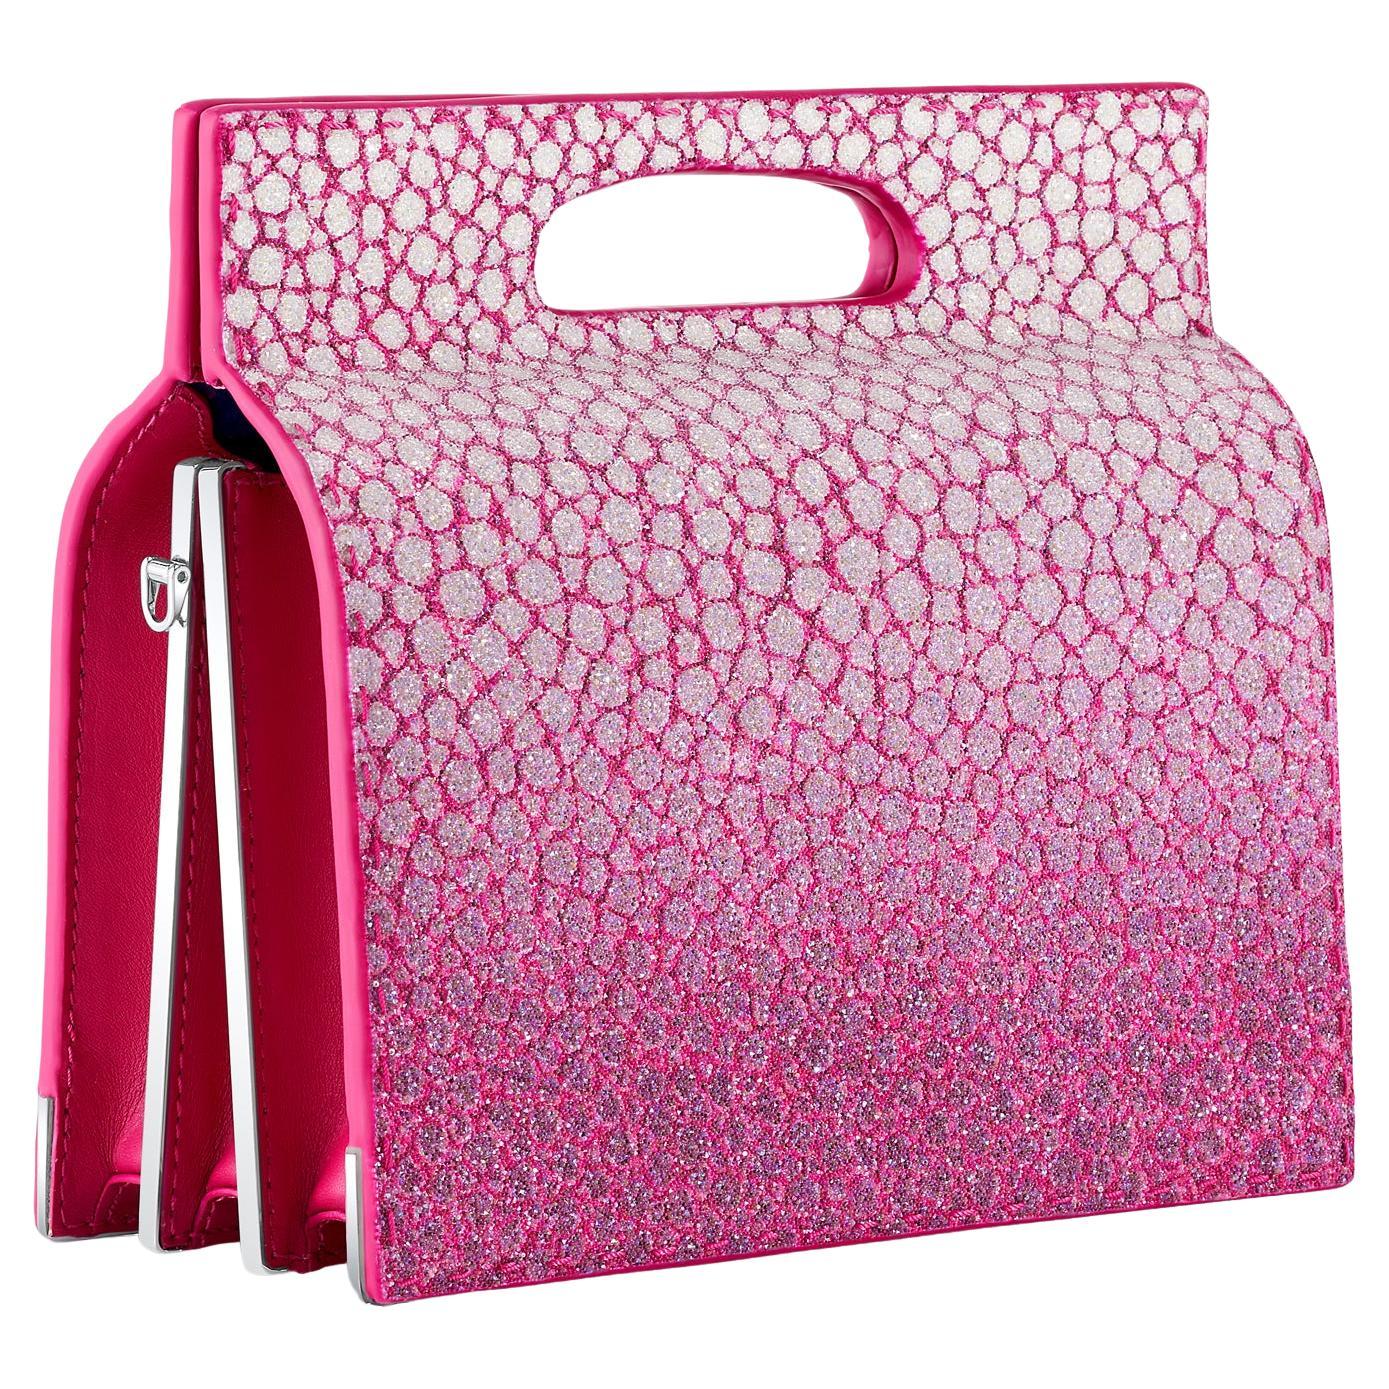 TYLER ELLIS Stella Handbag Tall in Pink & Silver Crystal with Silver Hardware 